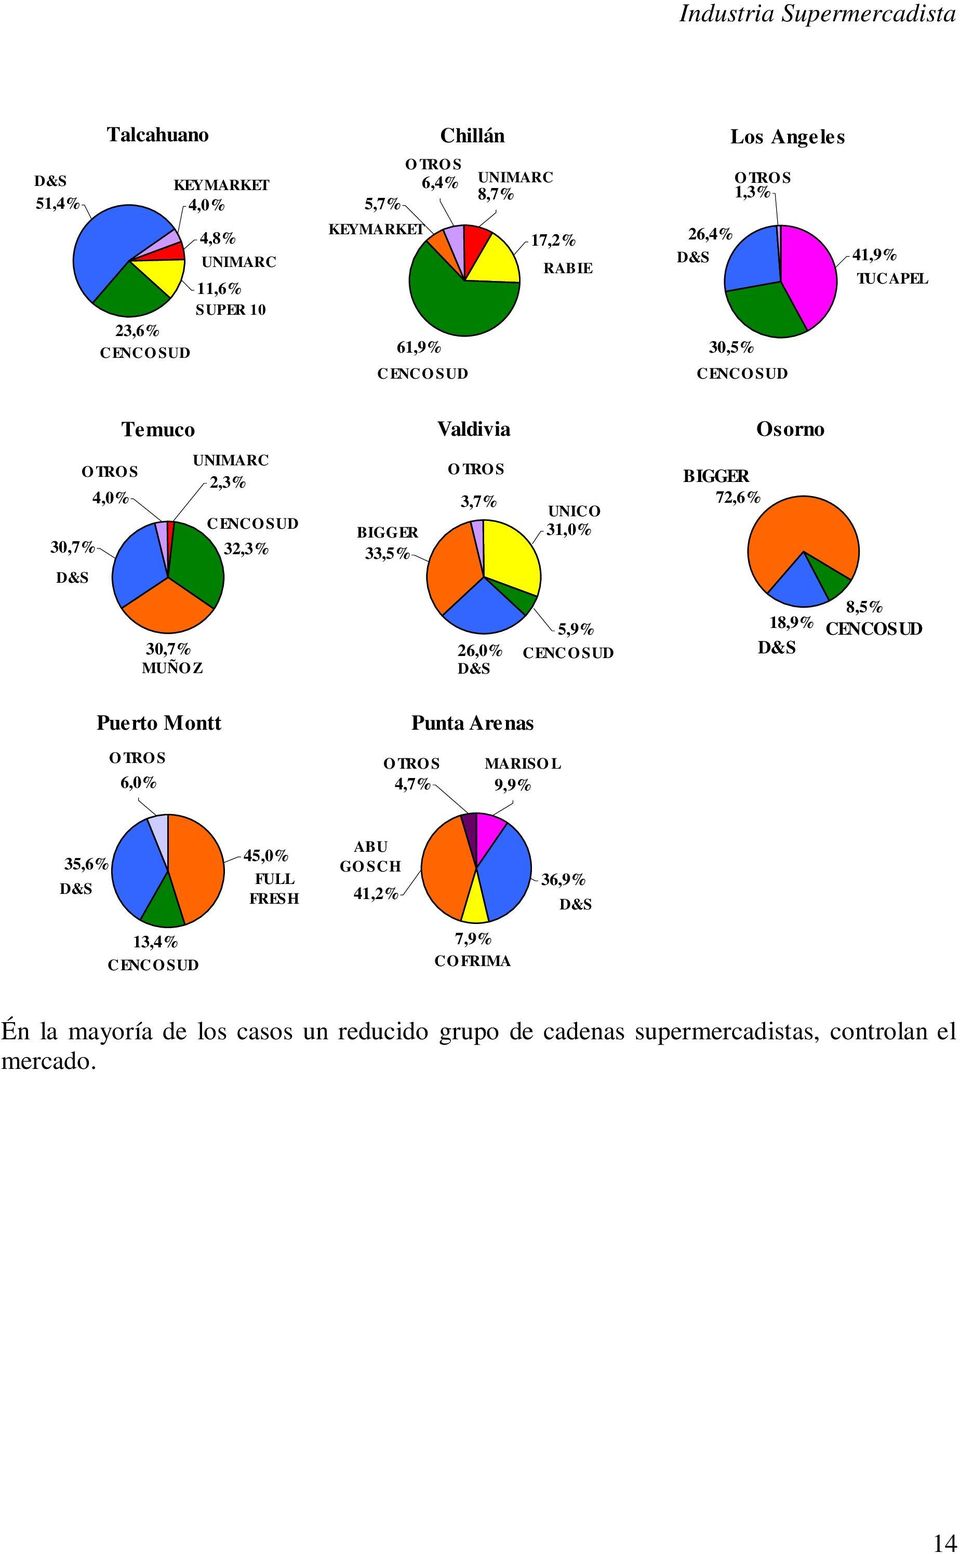 TRO S 3,7% UNICO 31,0% BIGGER 72,6% 30,7% MUÑO Z 26,0% D&S 5,9% CENCOSUD 18,9% D&S 8,5% CENCOSUD Puerto Montt O TRO S 6,0% Punta Arenas O TRO S MARISO L 4,7% 9,9% 35,6%